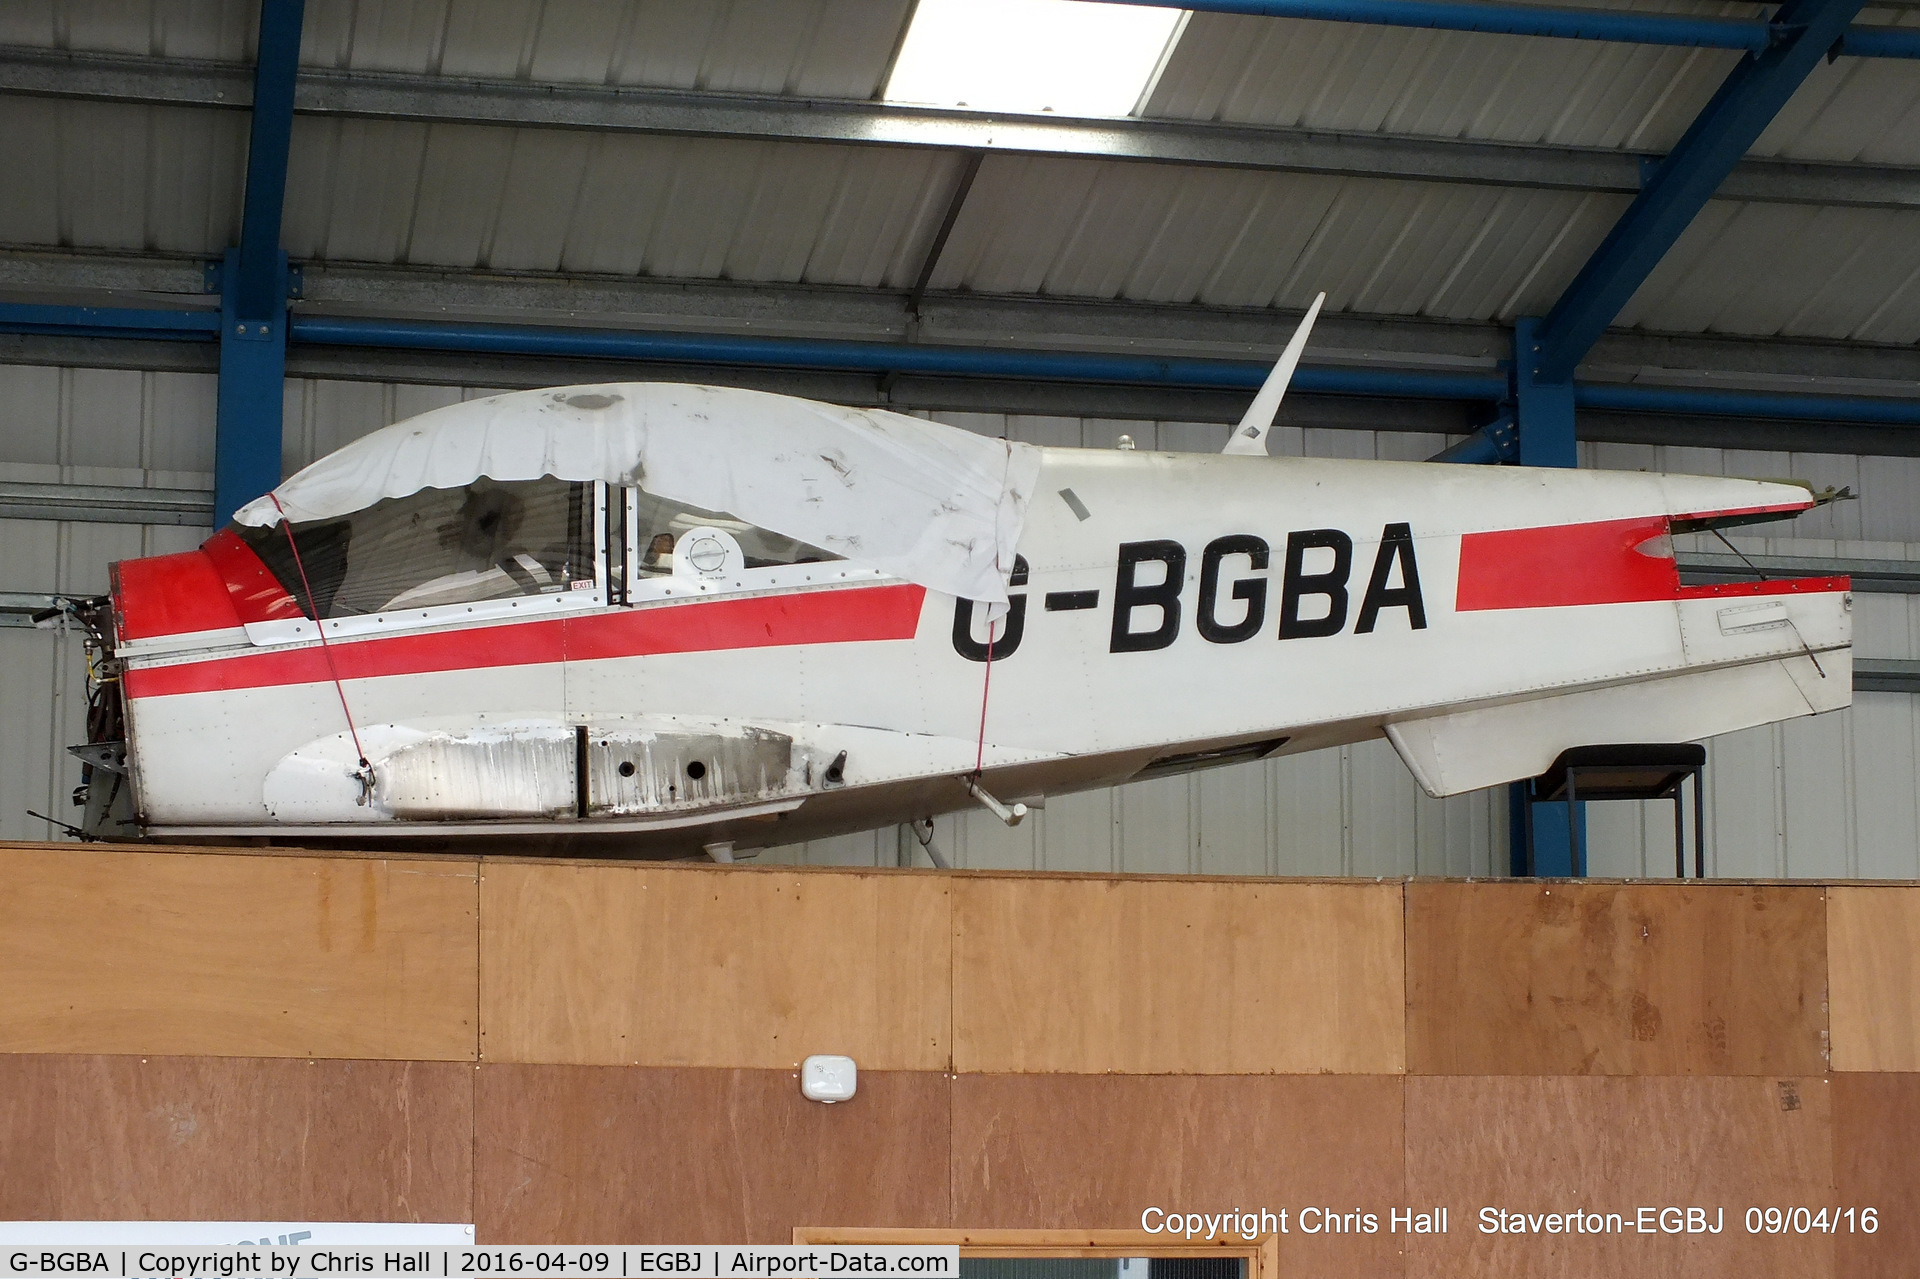 G-BGBA, 1978 Robin R-2100A C/N 133, fuselage stored in a hangar at Staverton